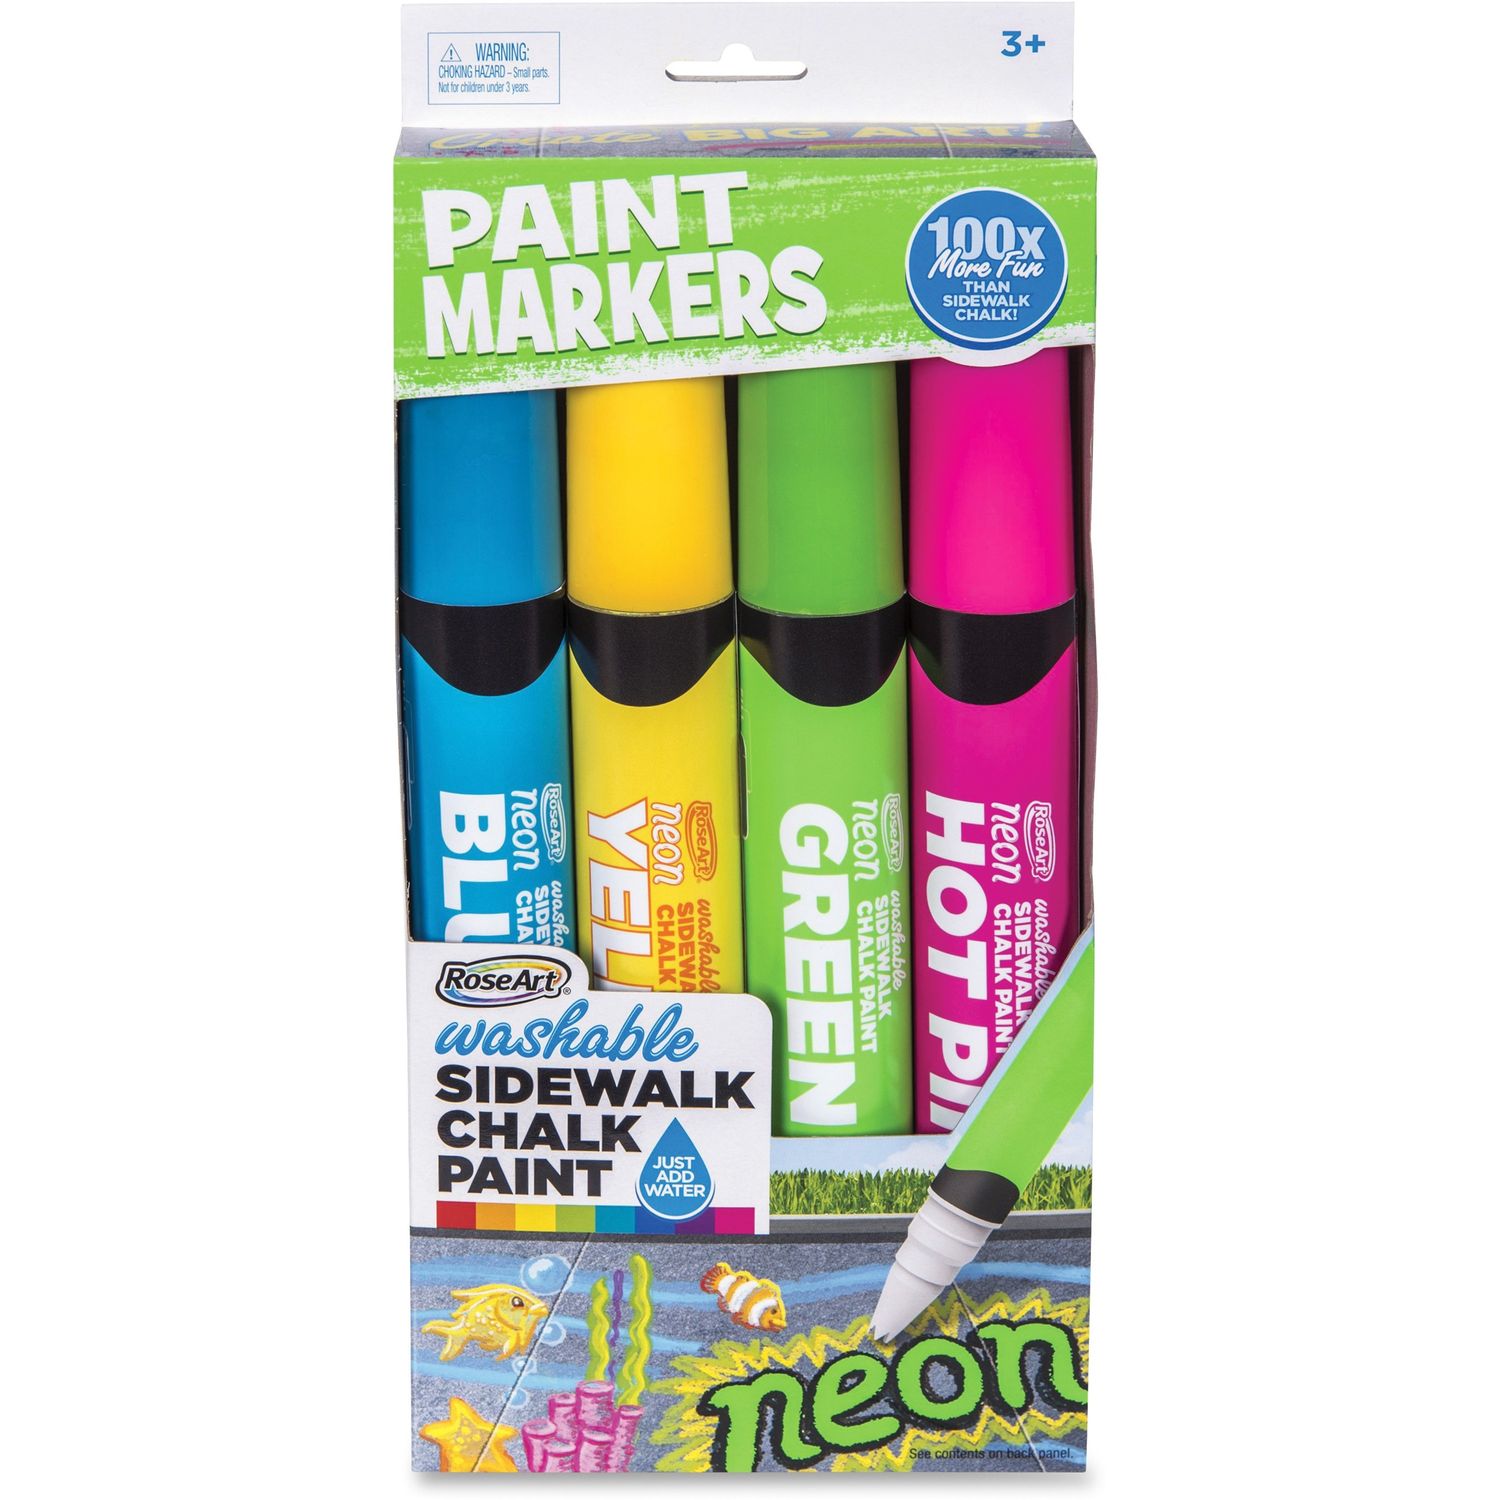 Washable Sidewalk Chalk Paint Markers by Mattel, Inc RAIDMP72